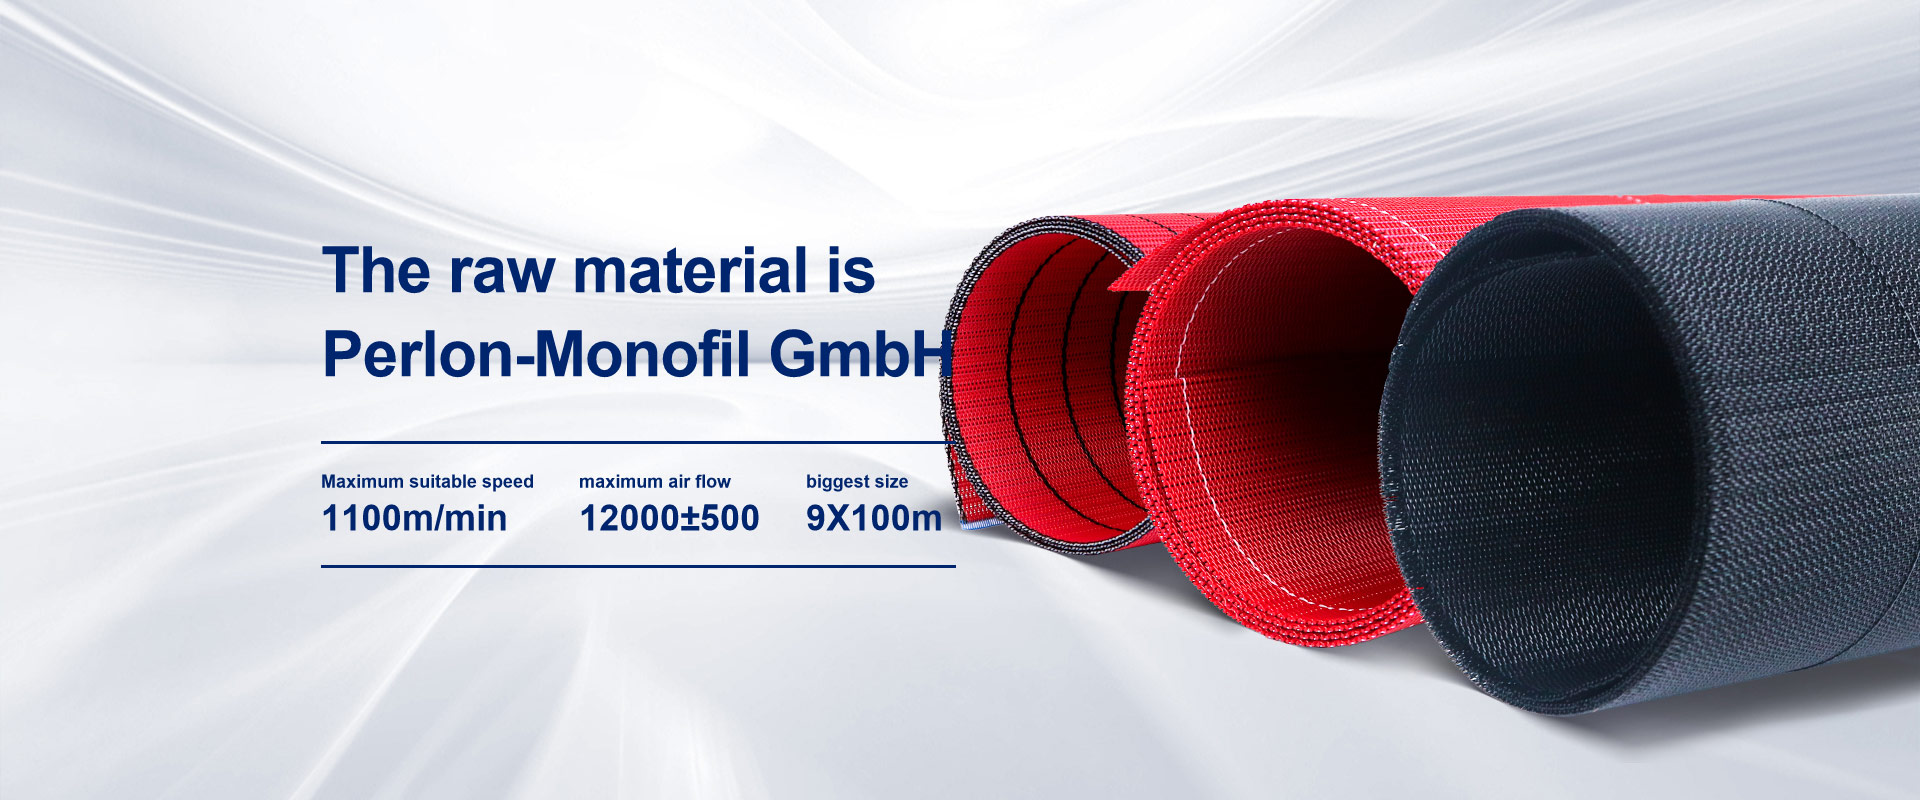 The raw material is Perlon-Monofil GmbH